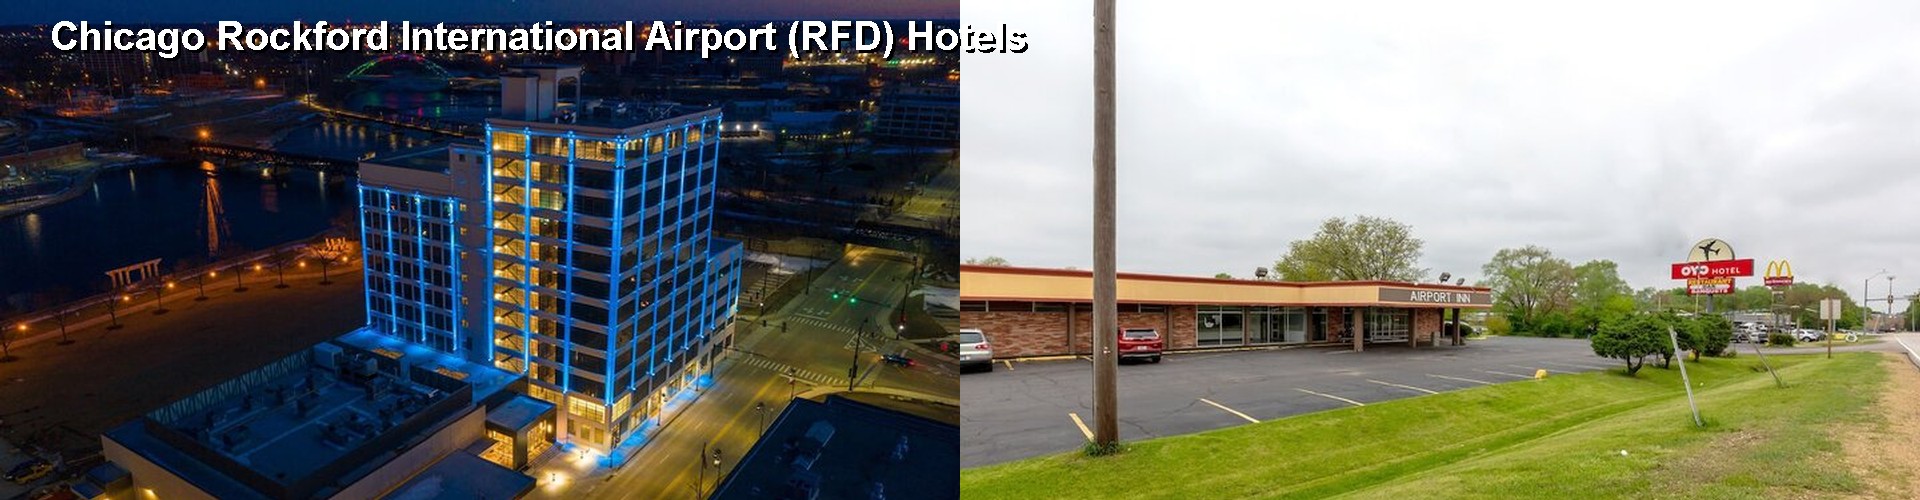 1 Best Hotels near Chicago Rockford International Airport (RFD)